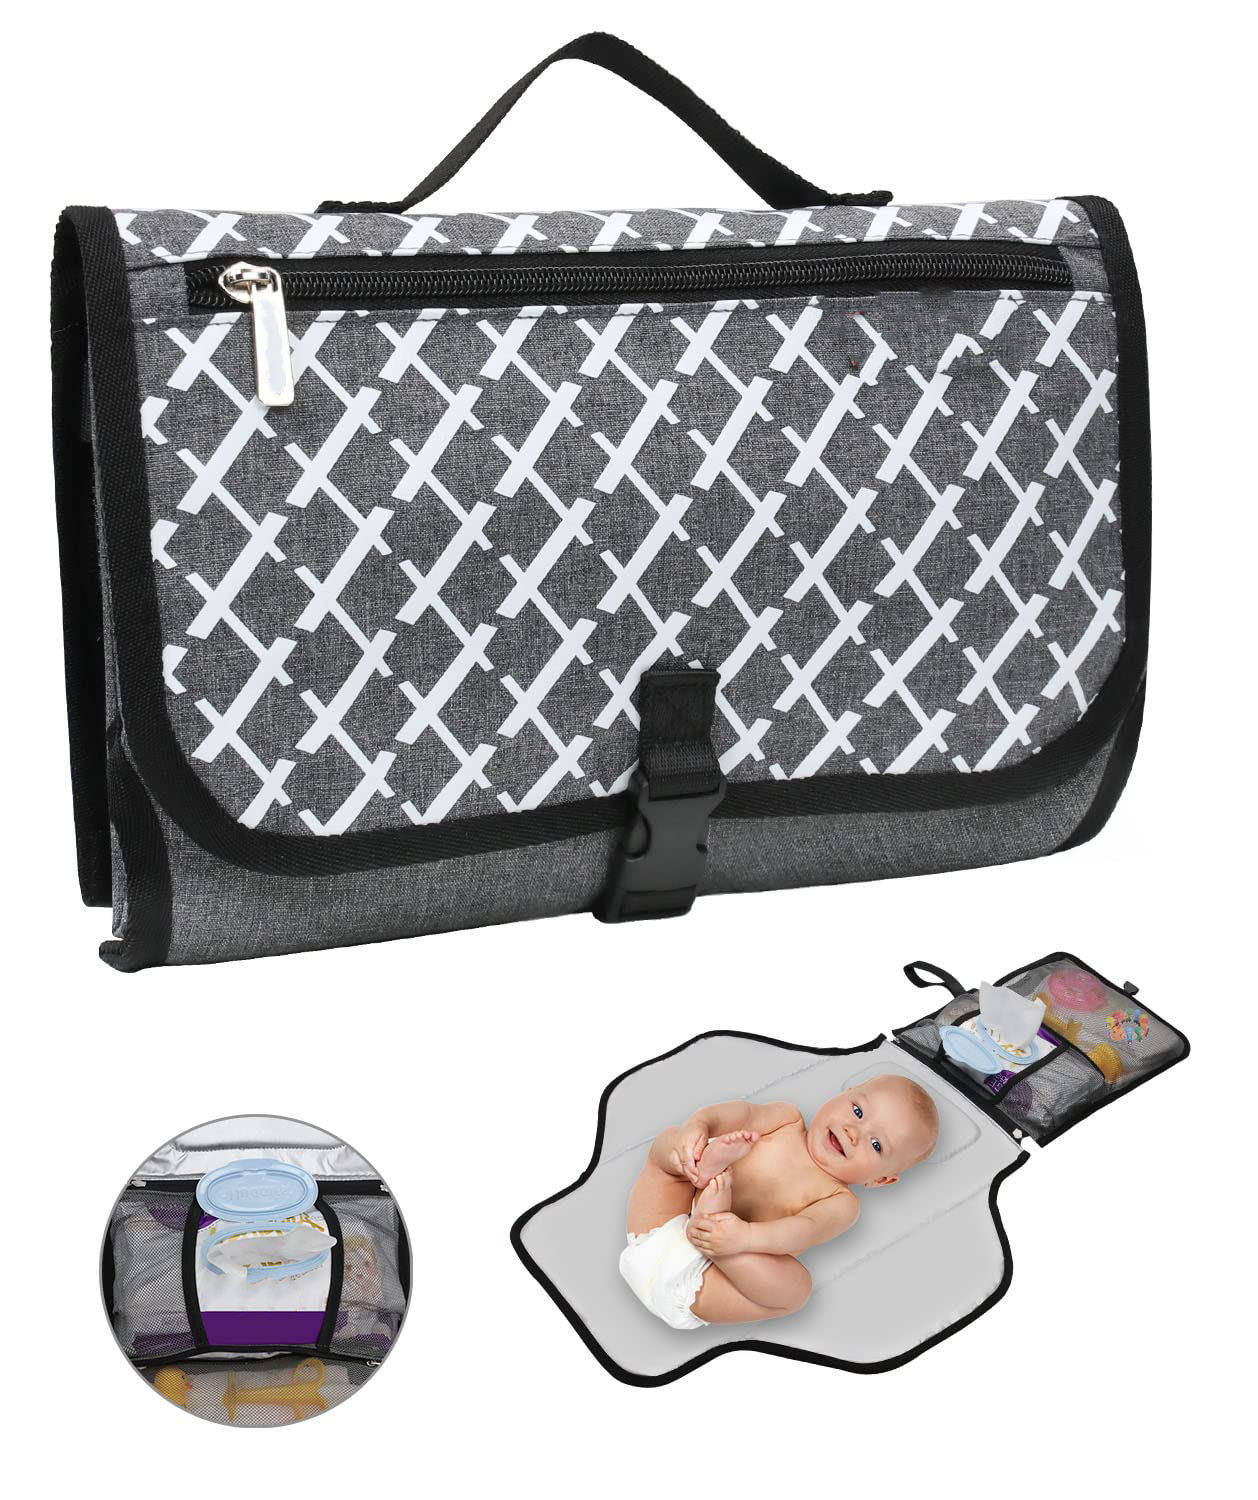 Cambiador portátil para bebé Estación de cambiador de viaje impermeable para cambiar pañales de bebé con bolsillo con cremallera